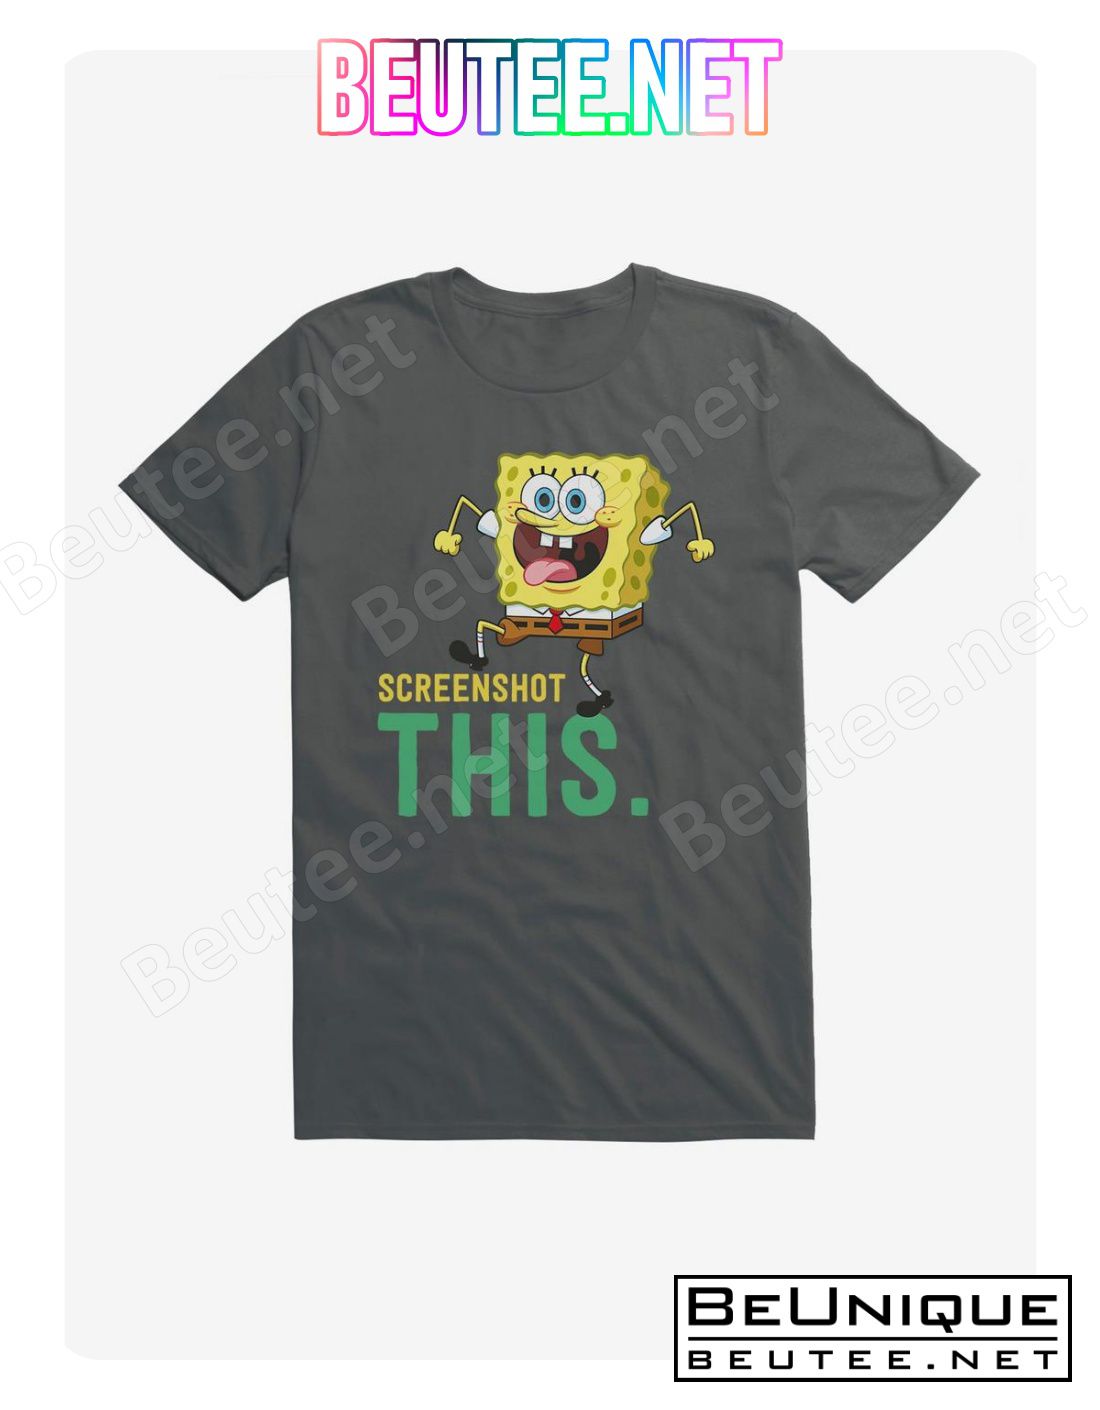 SpongeBob SquarePants Screenshot This T-Shirt